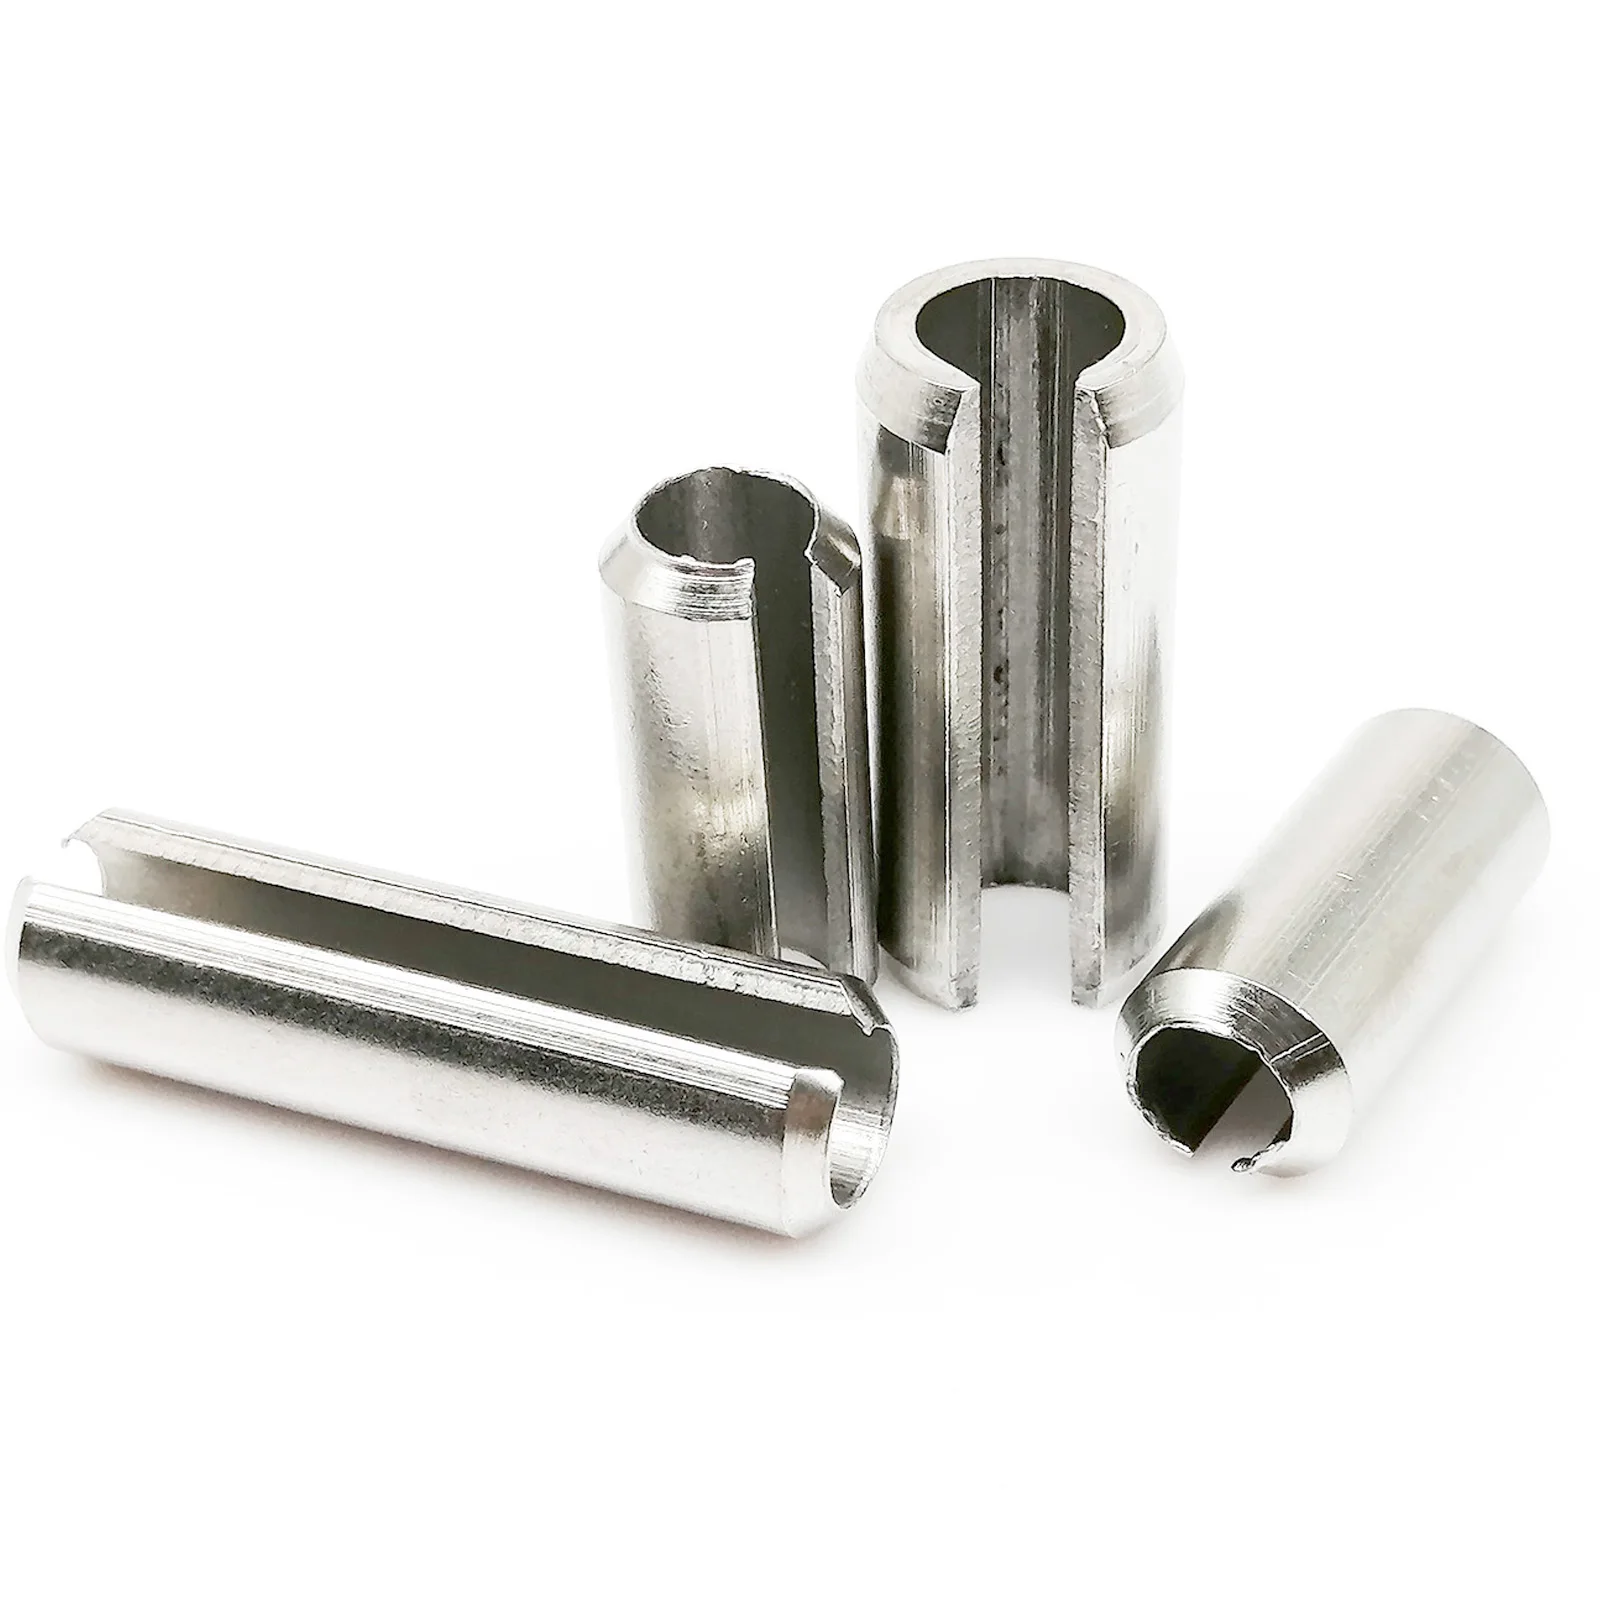 A2 304 Stainless M5,6,8,10mm Split-Pins Split Cotter Lock Retaining Pin 